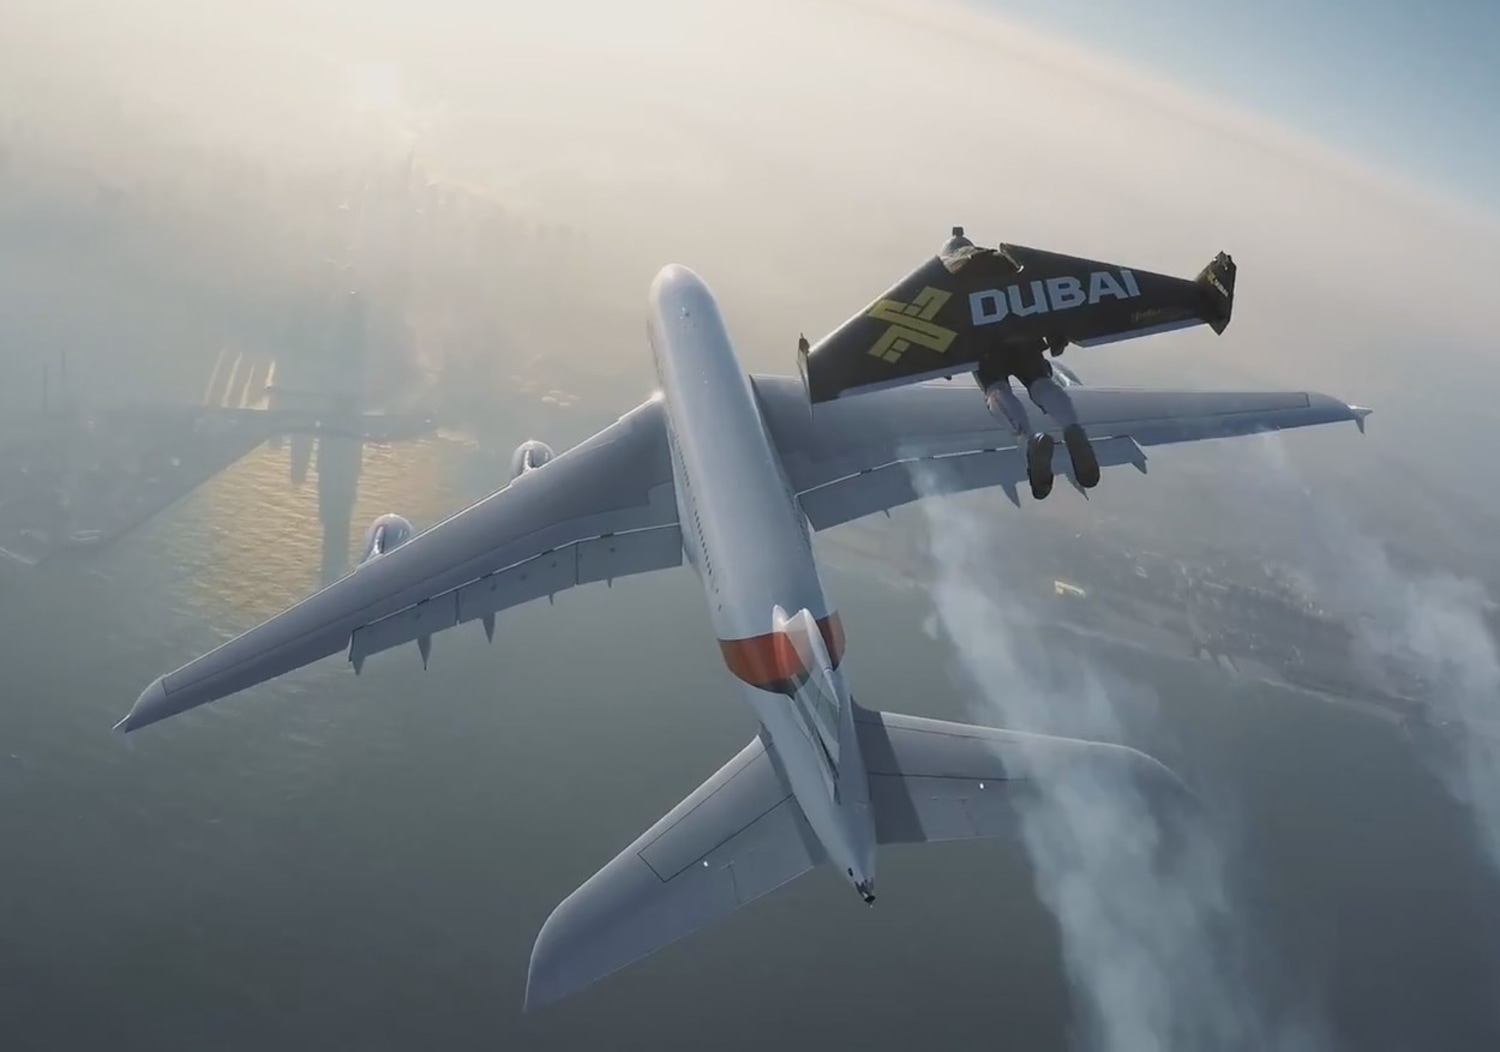 Watch This Astonishing Video of Jetpacks Over Dubai Now